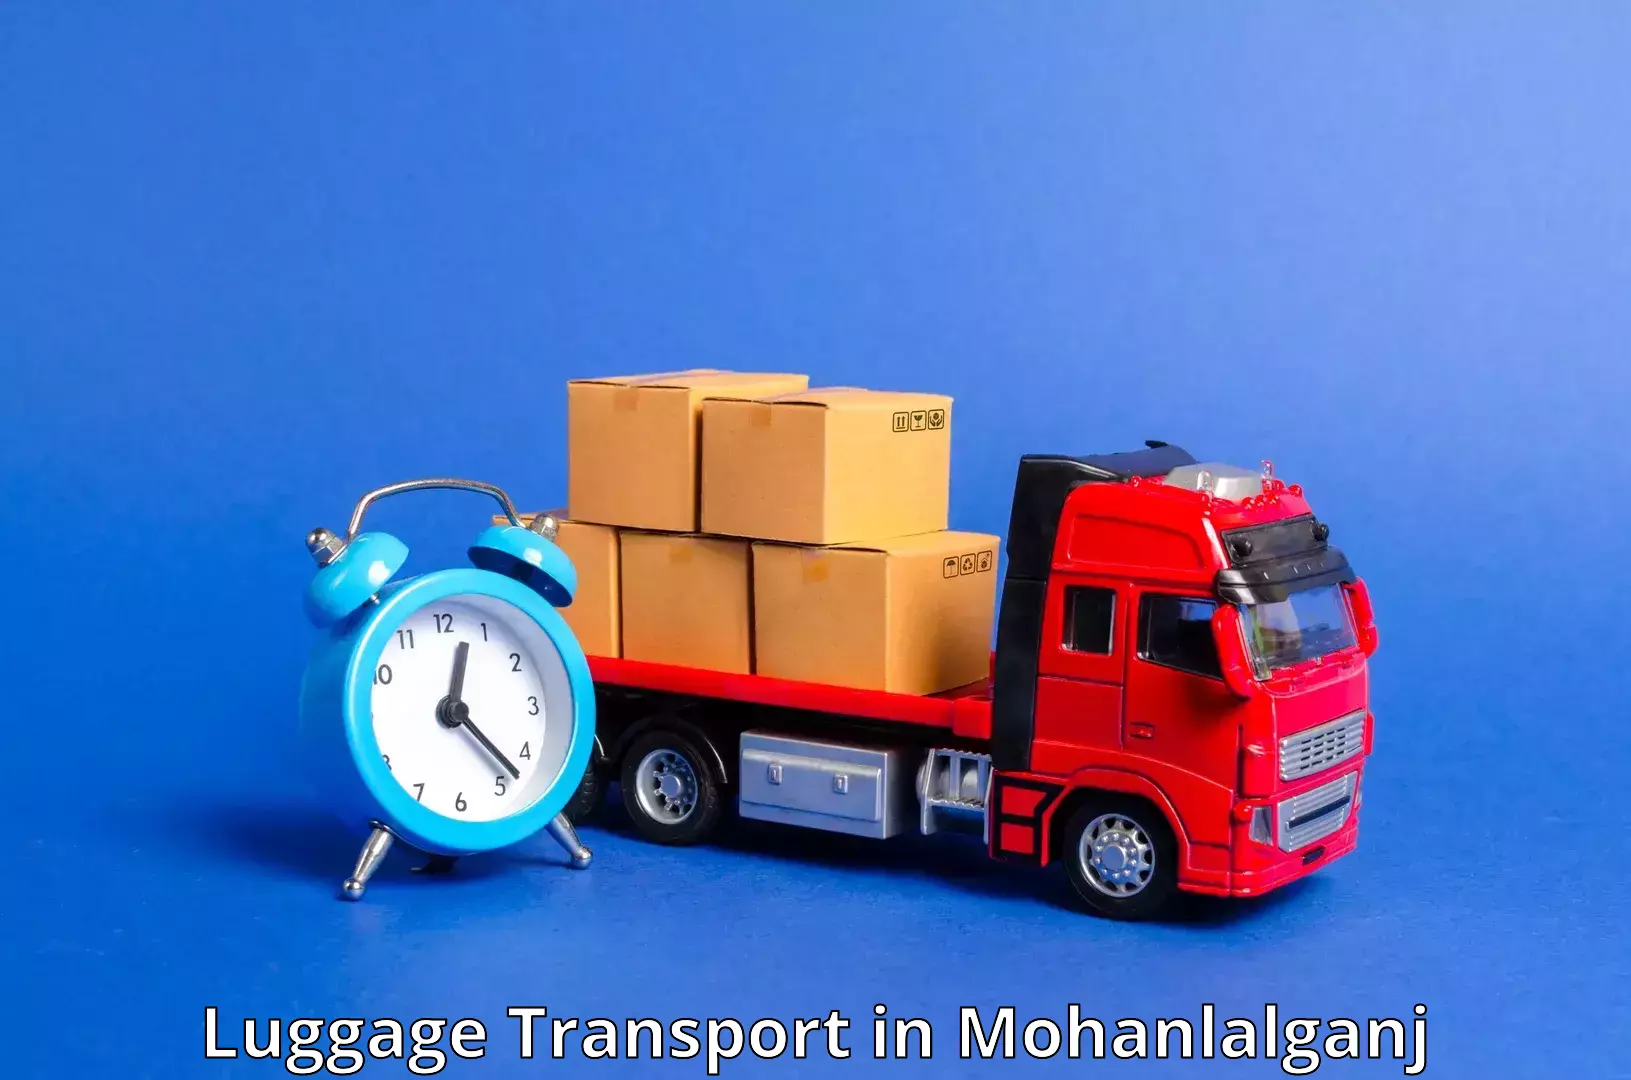 Luggage transit service in Mohanlalganj